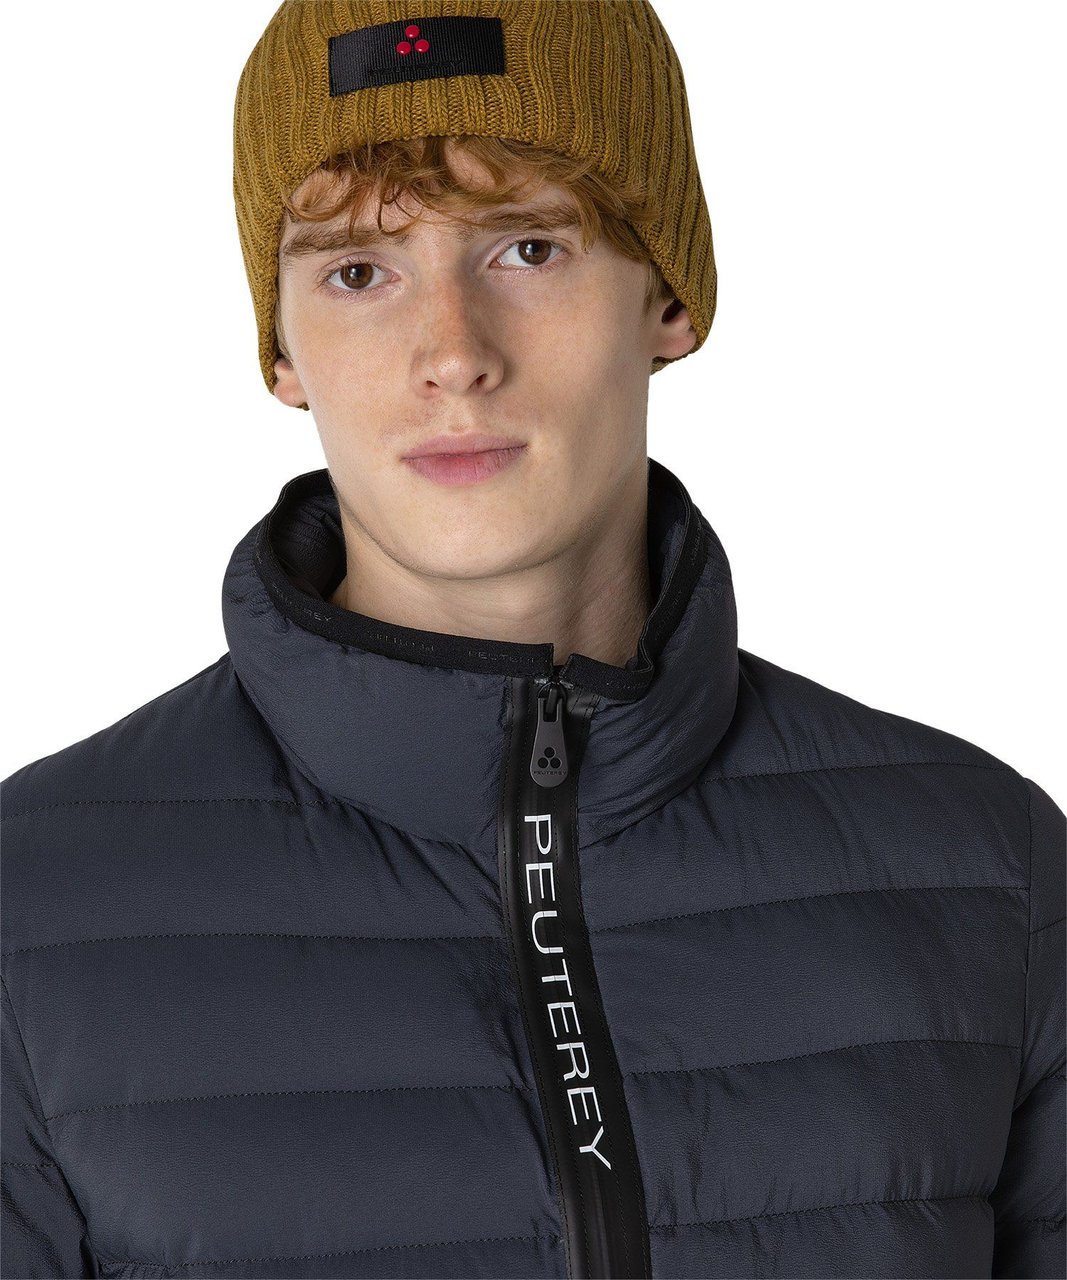 Peuterey Ultra-lightweight, windproof down jacket with Primaloft padding Grijs